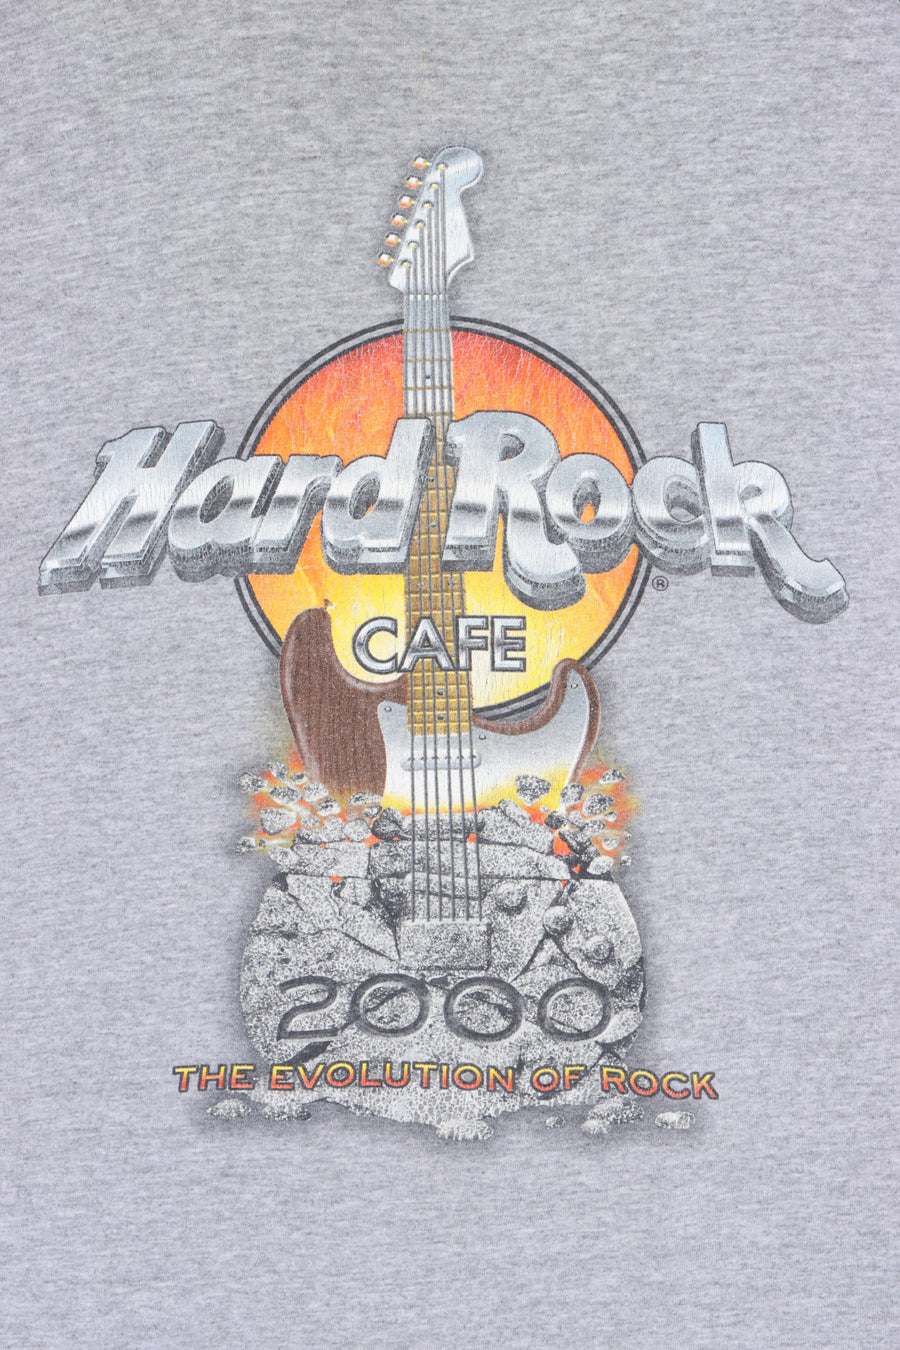 HARD ROCK CAFE New York 2000 Front Back Guitar T-Shirt (XL)